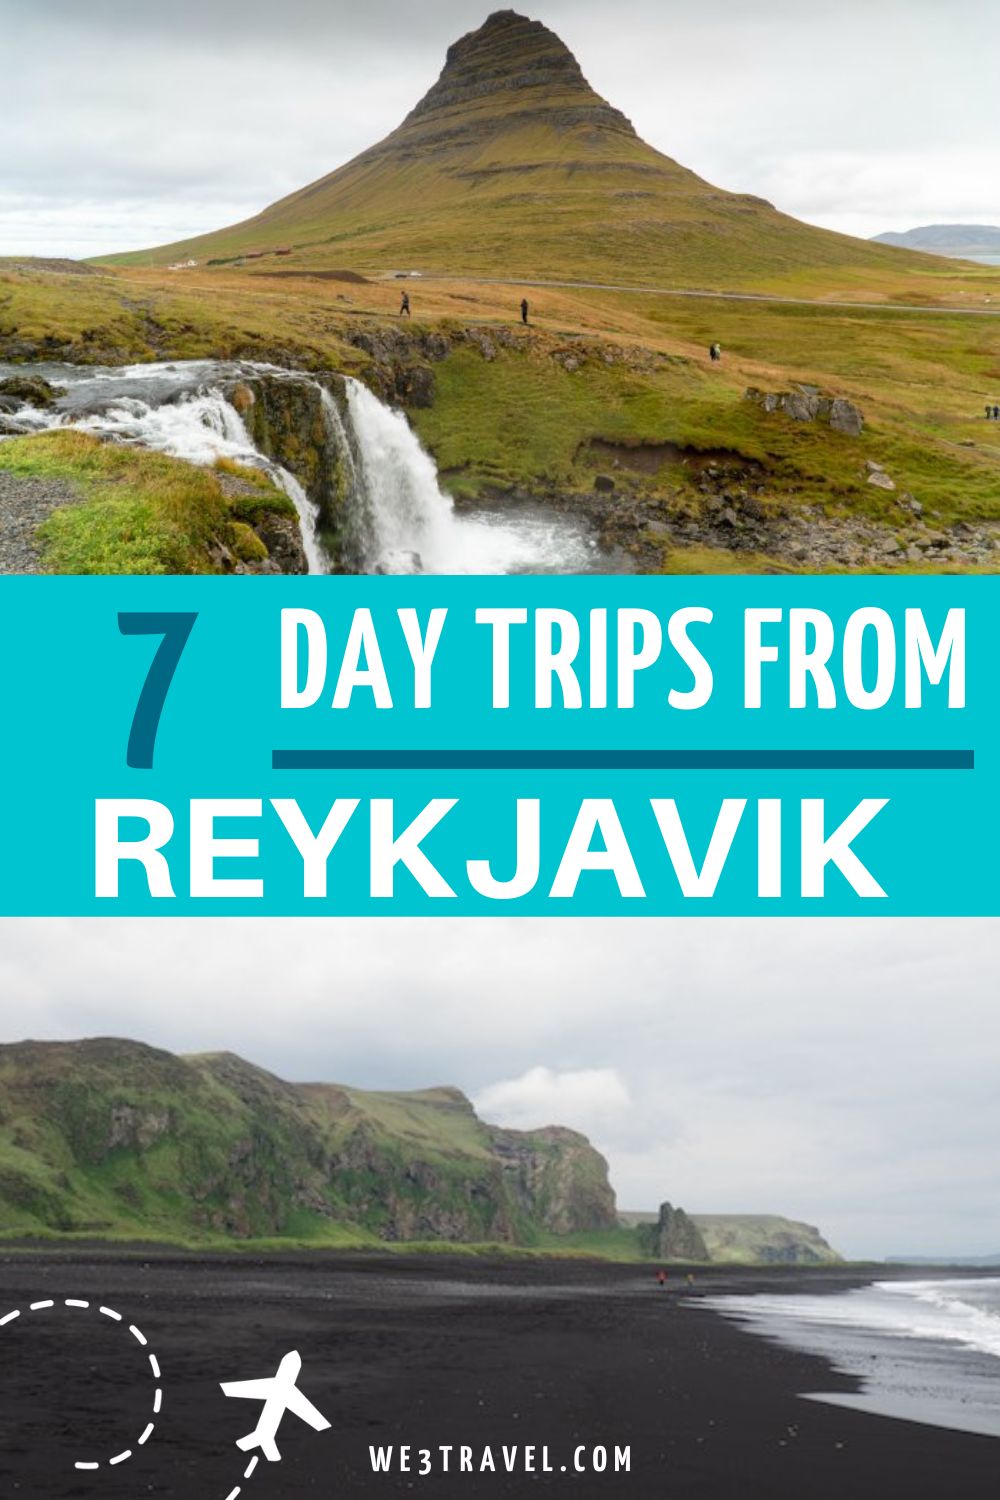 7 Day trips from Reykjavik Iceland